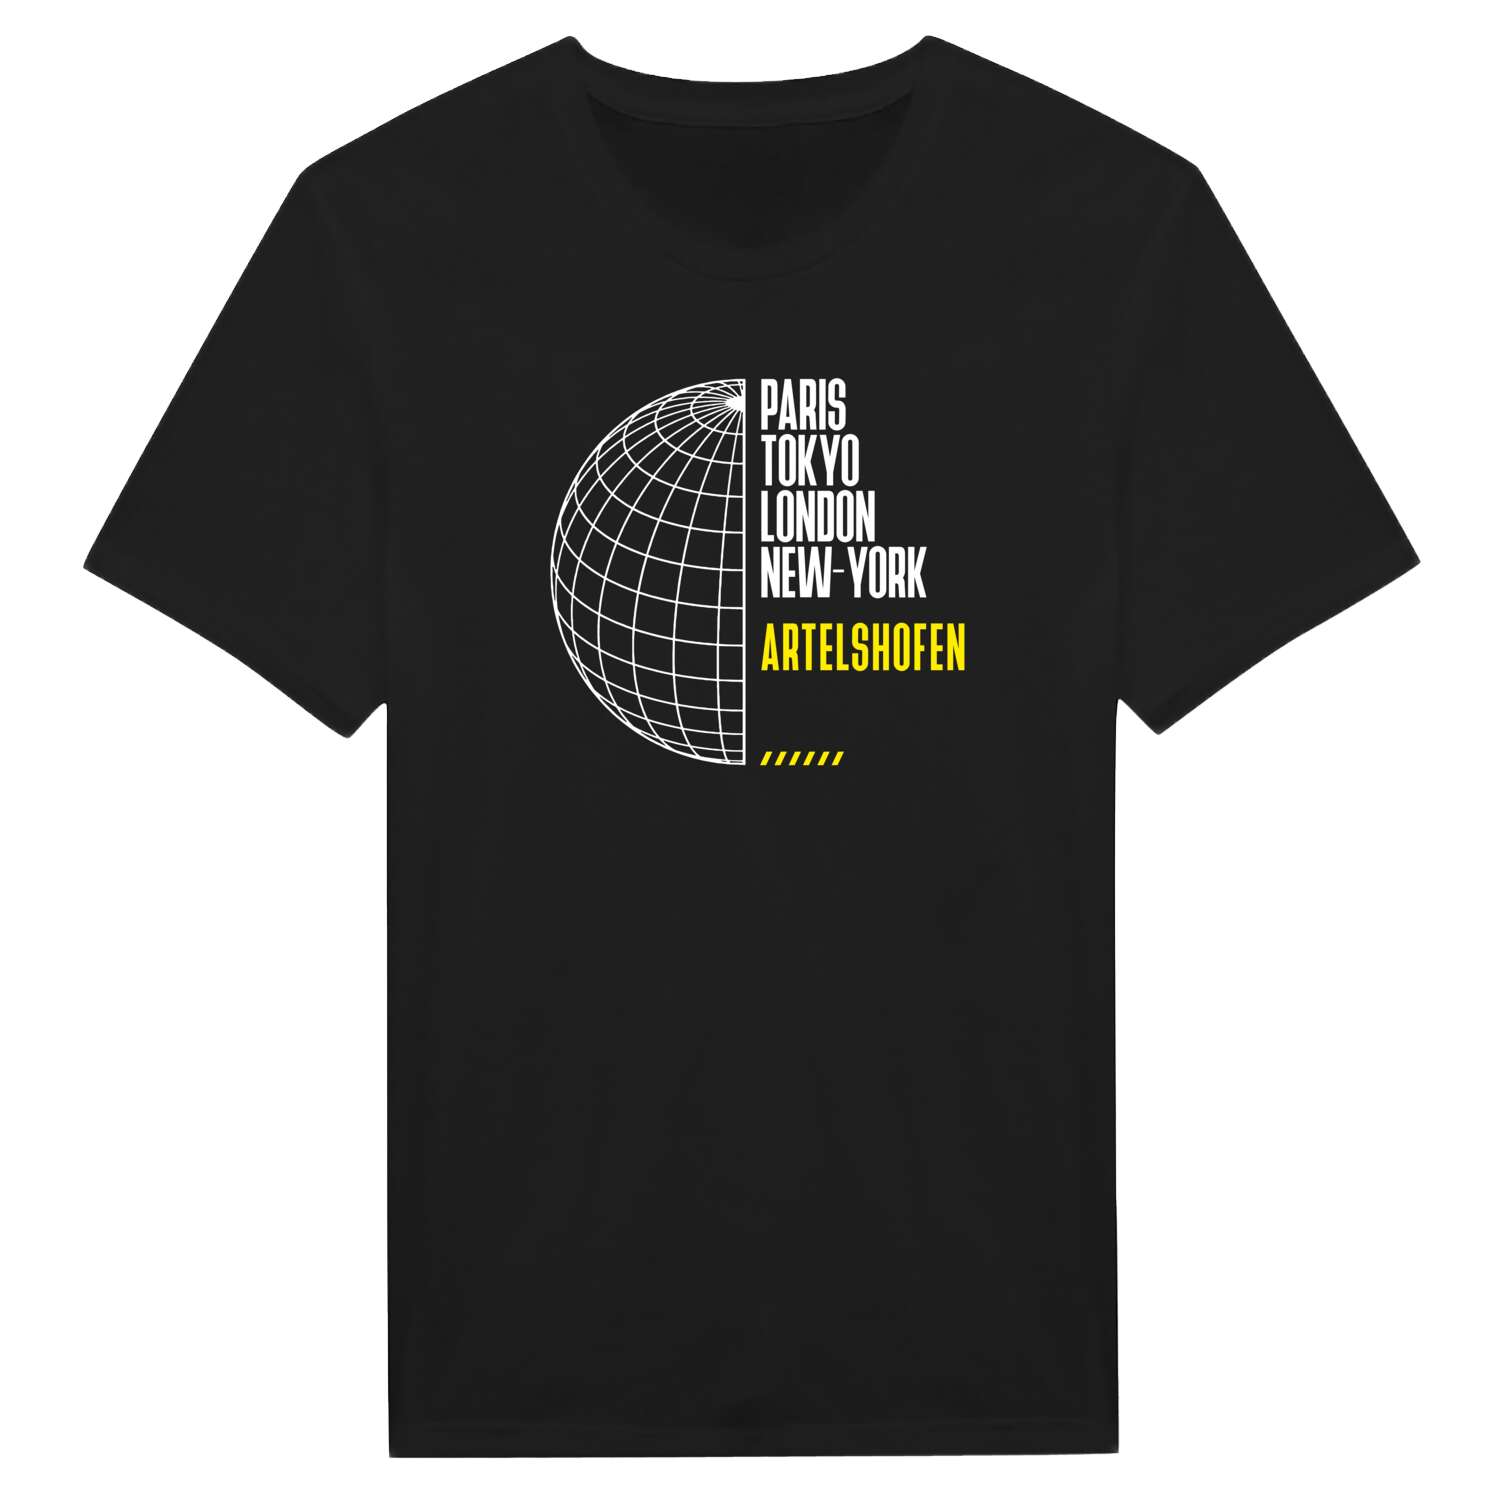 Artelshofen T-Shirt »Paris Tokyo London«